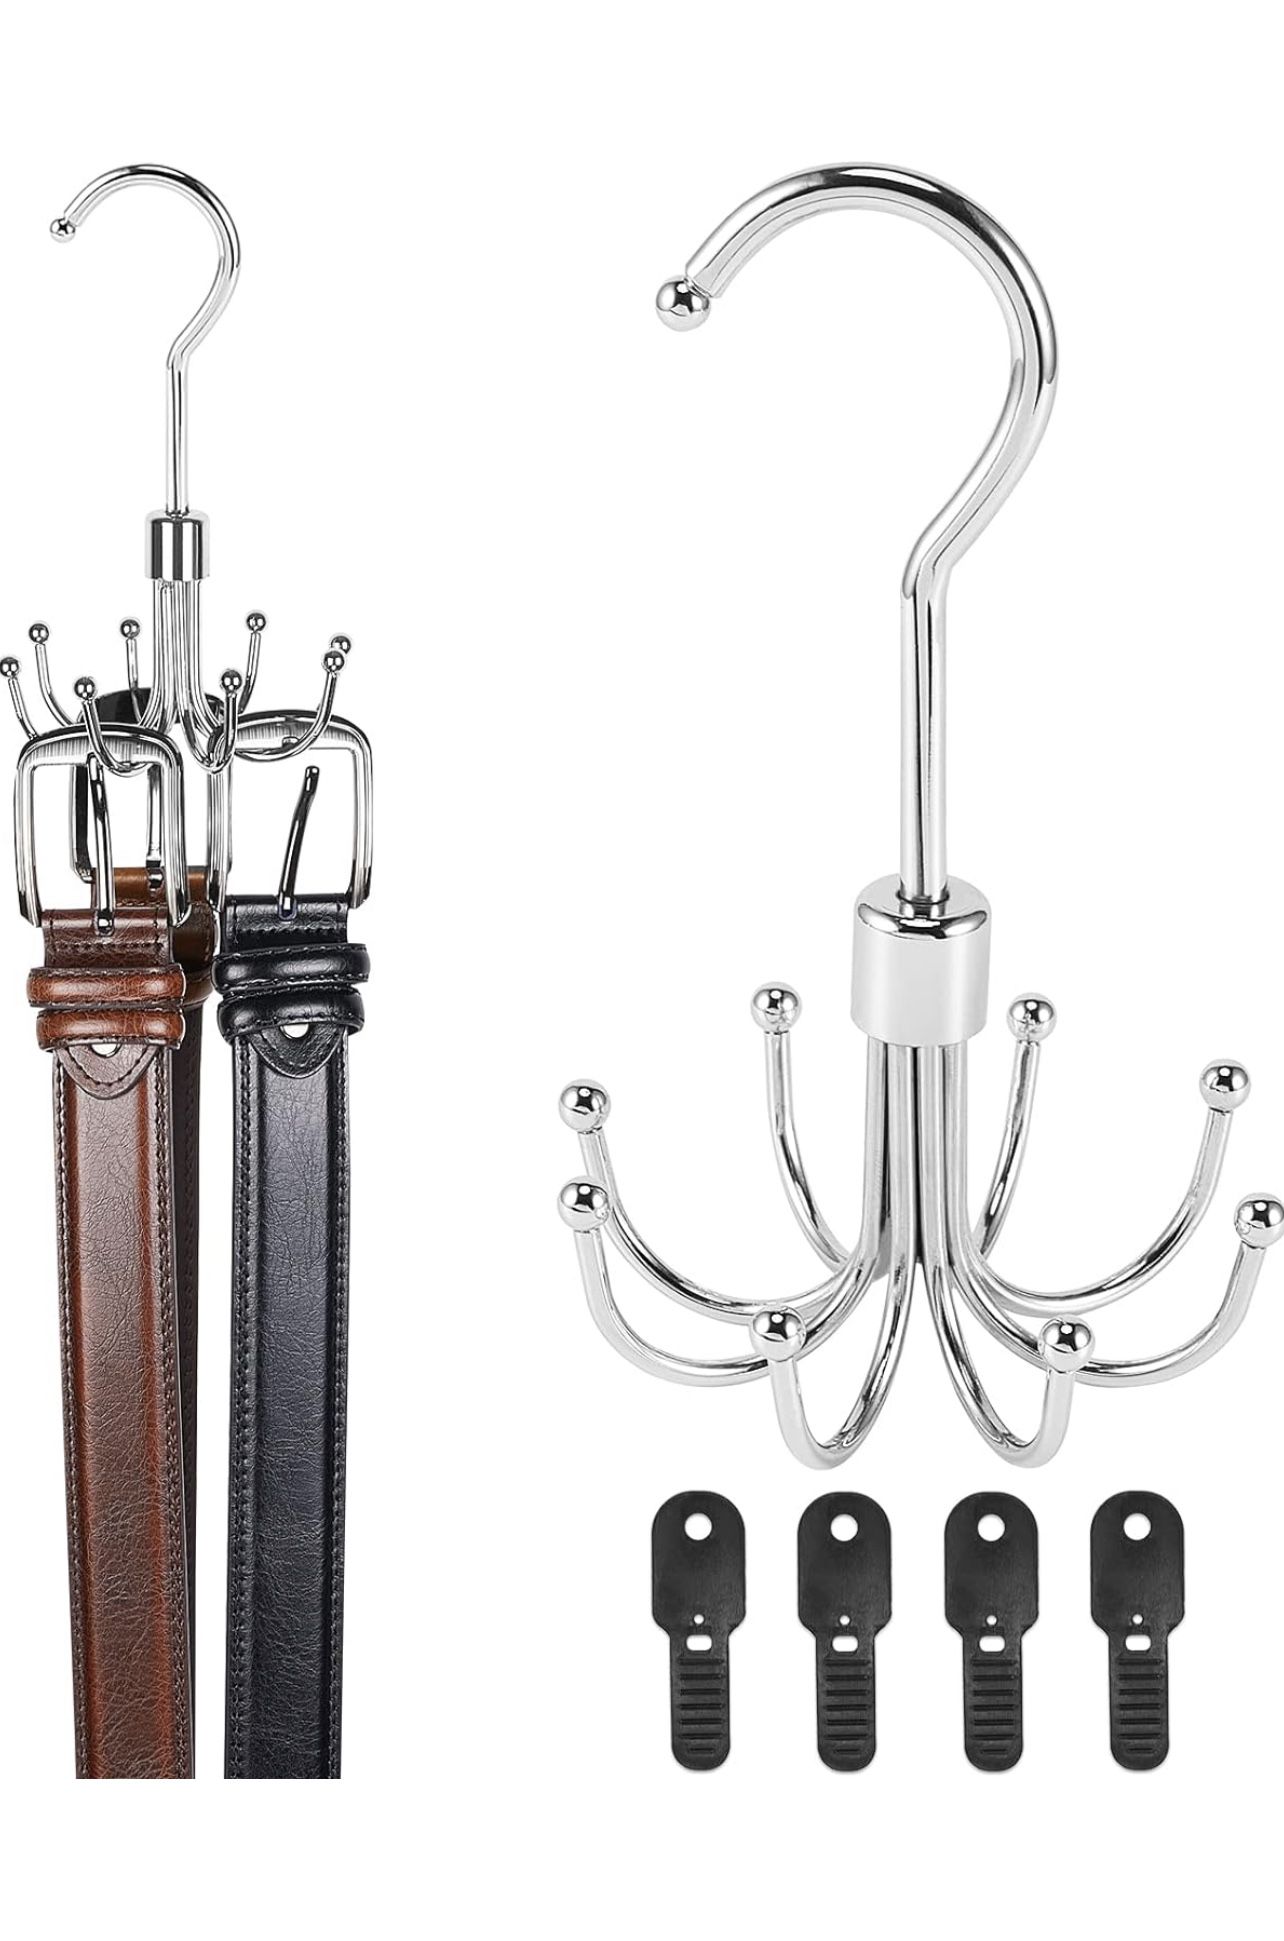 New! Unused! Belt Hanger for Closet, Monalife Metal 360°Rotating Tie and Belt Or